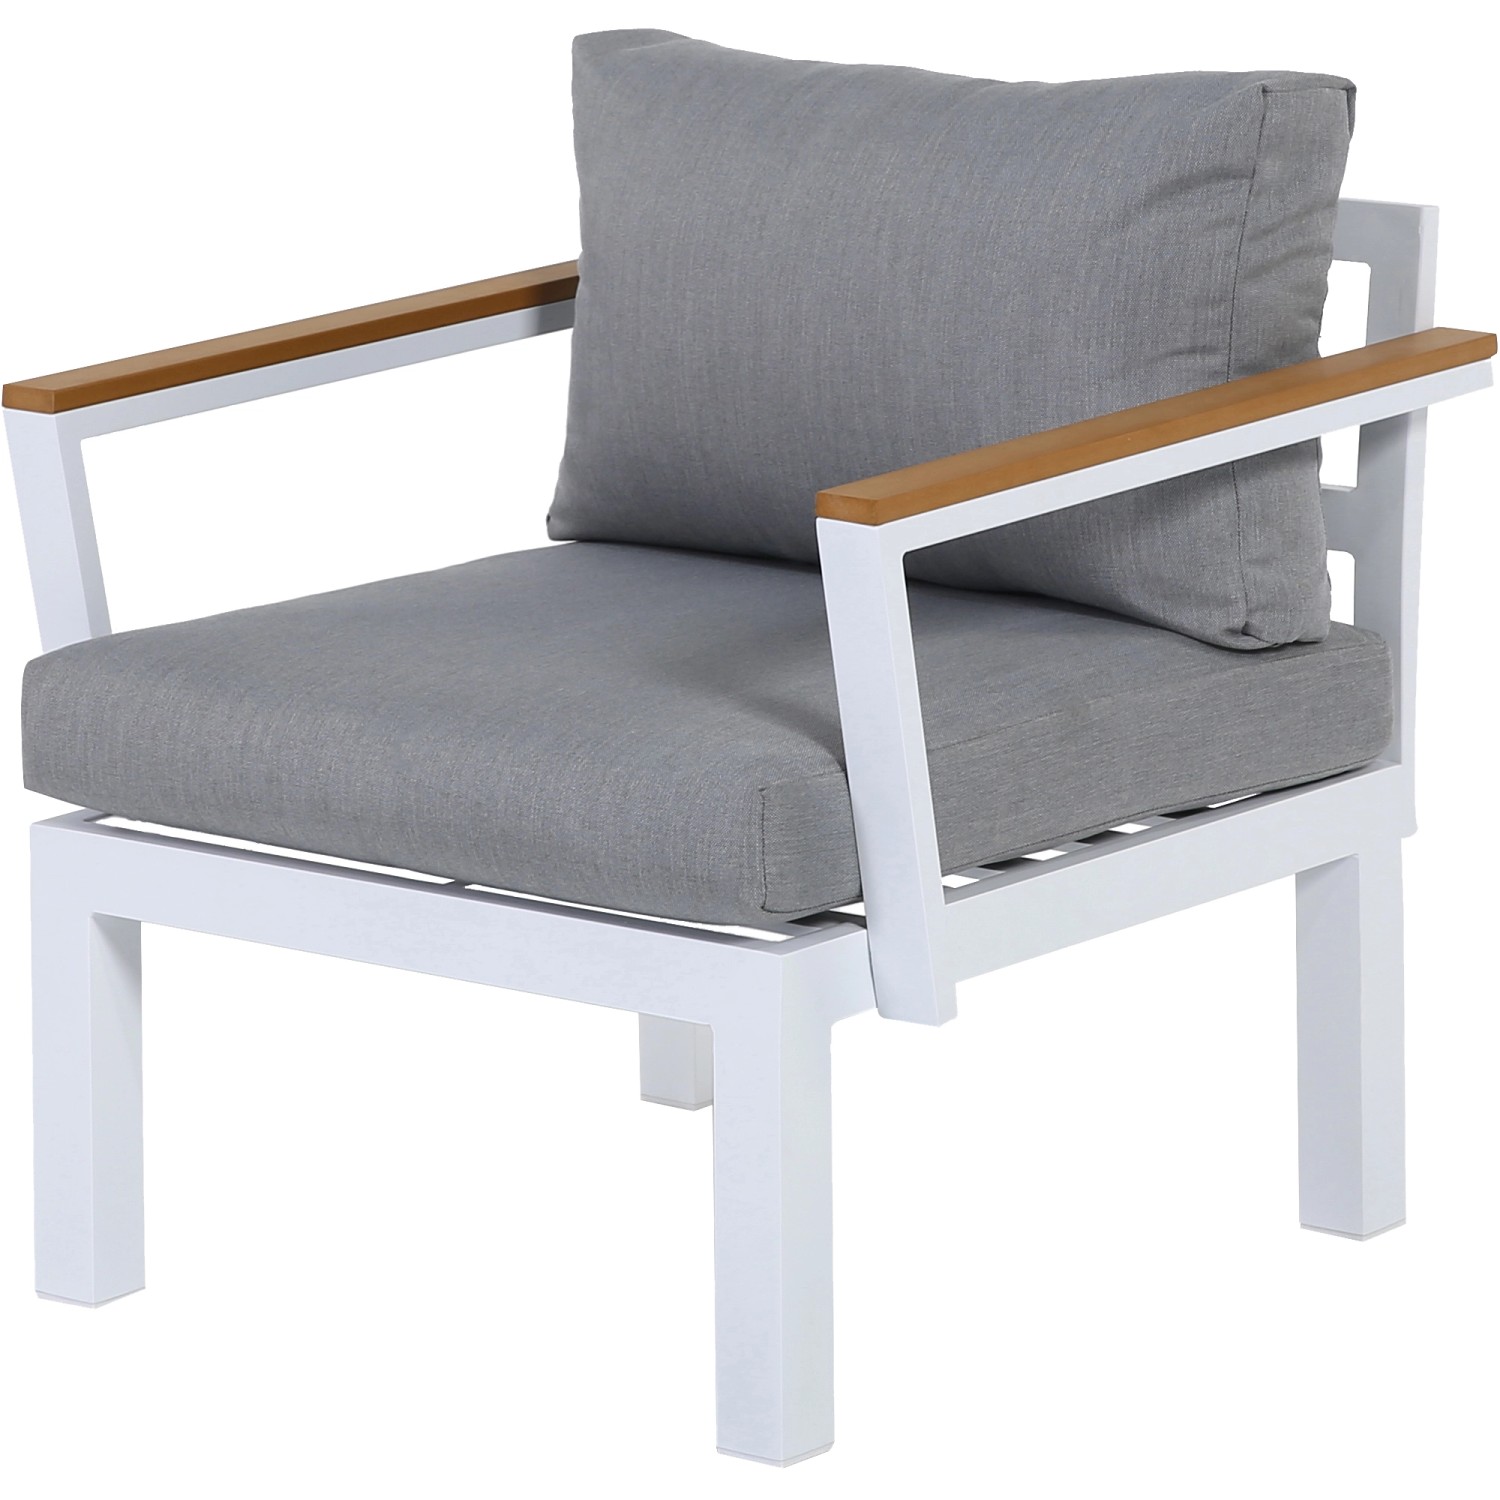 Gartenfreude Aluminium-Sessel Ambience 75 x 63 x 44 cm Weiß-Grau von Gartenfreude